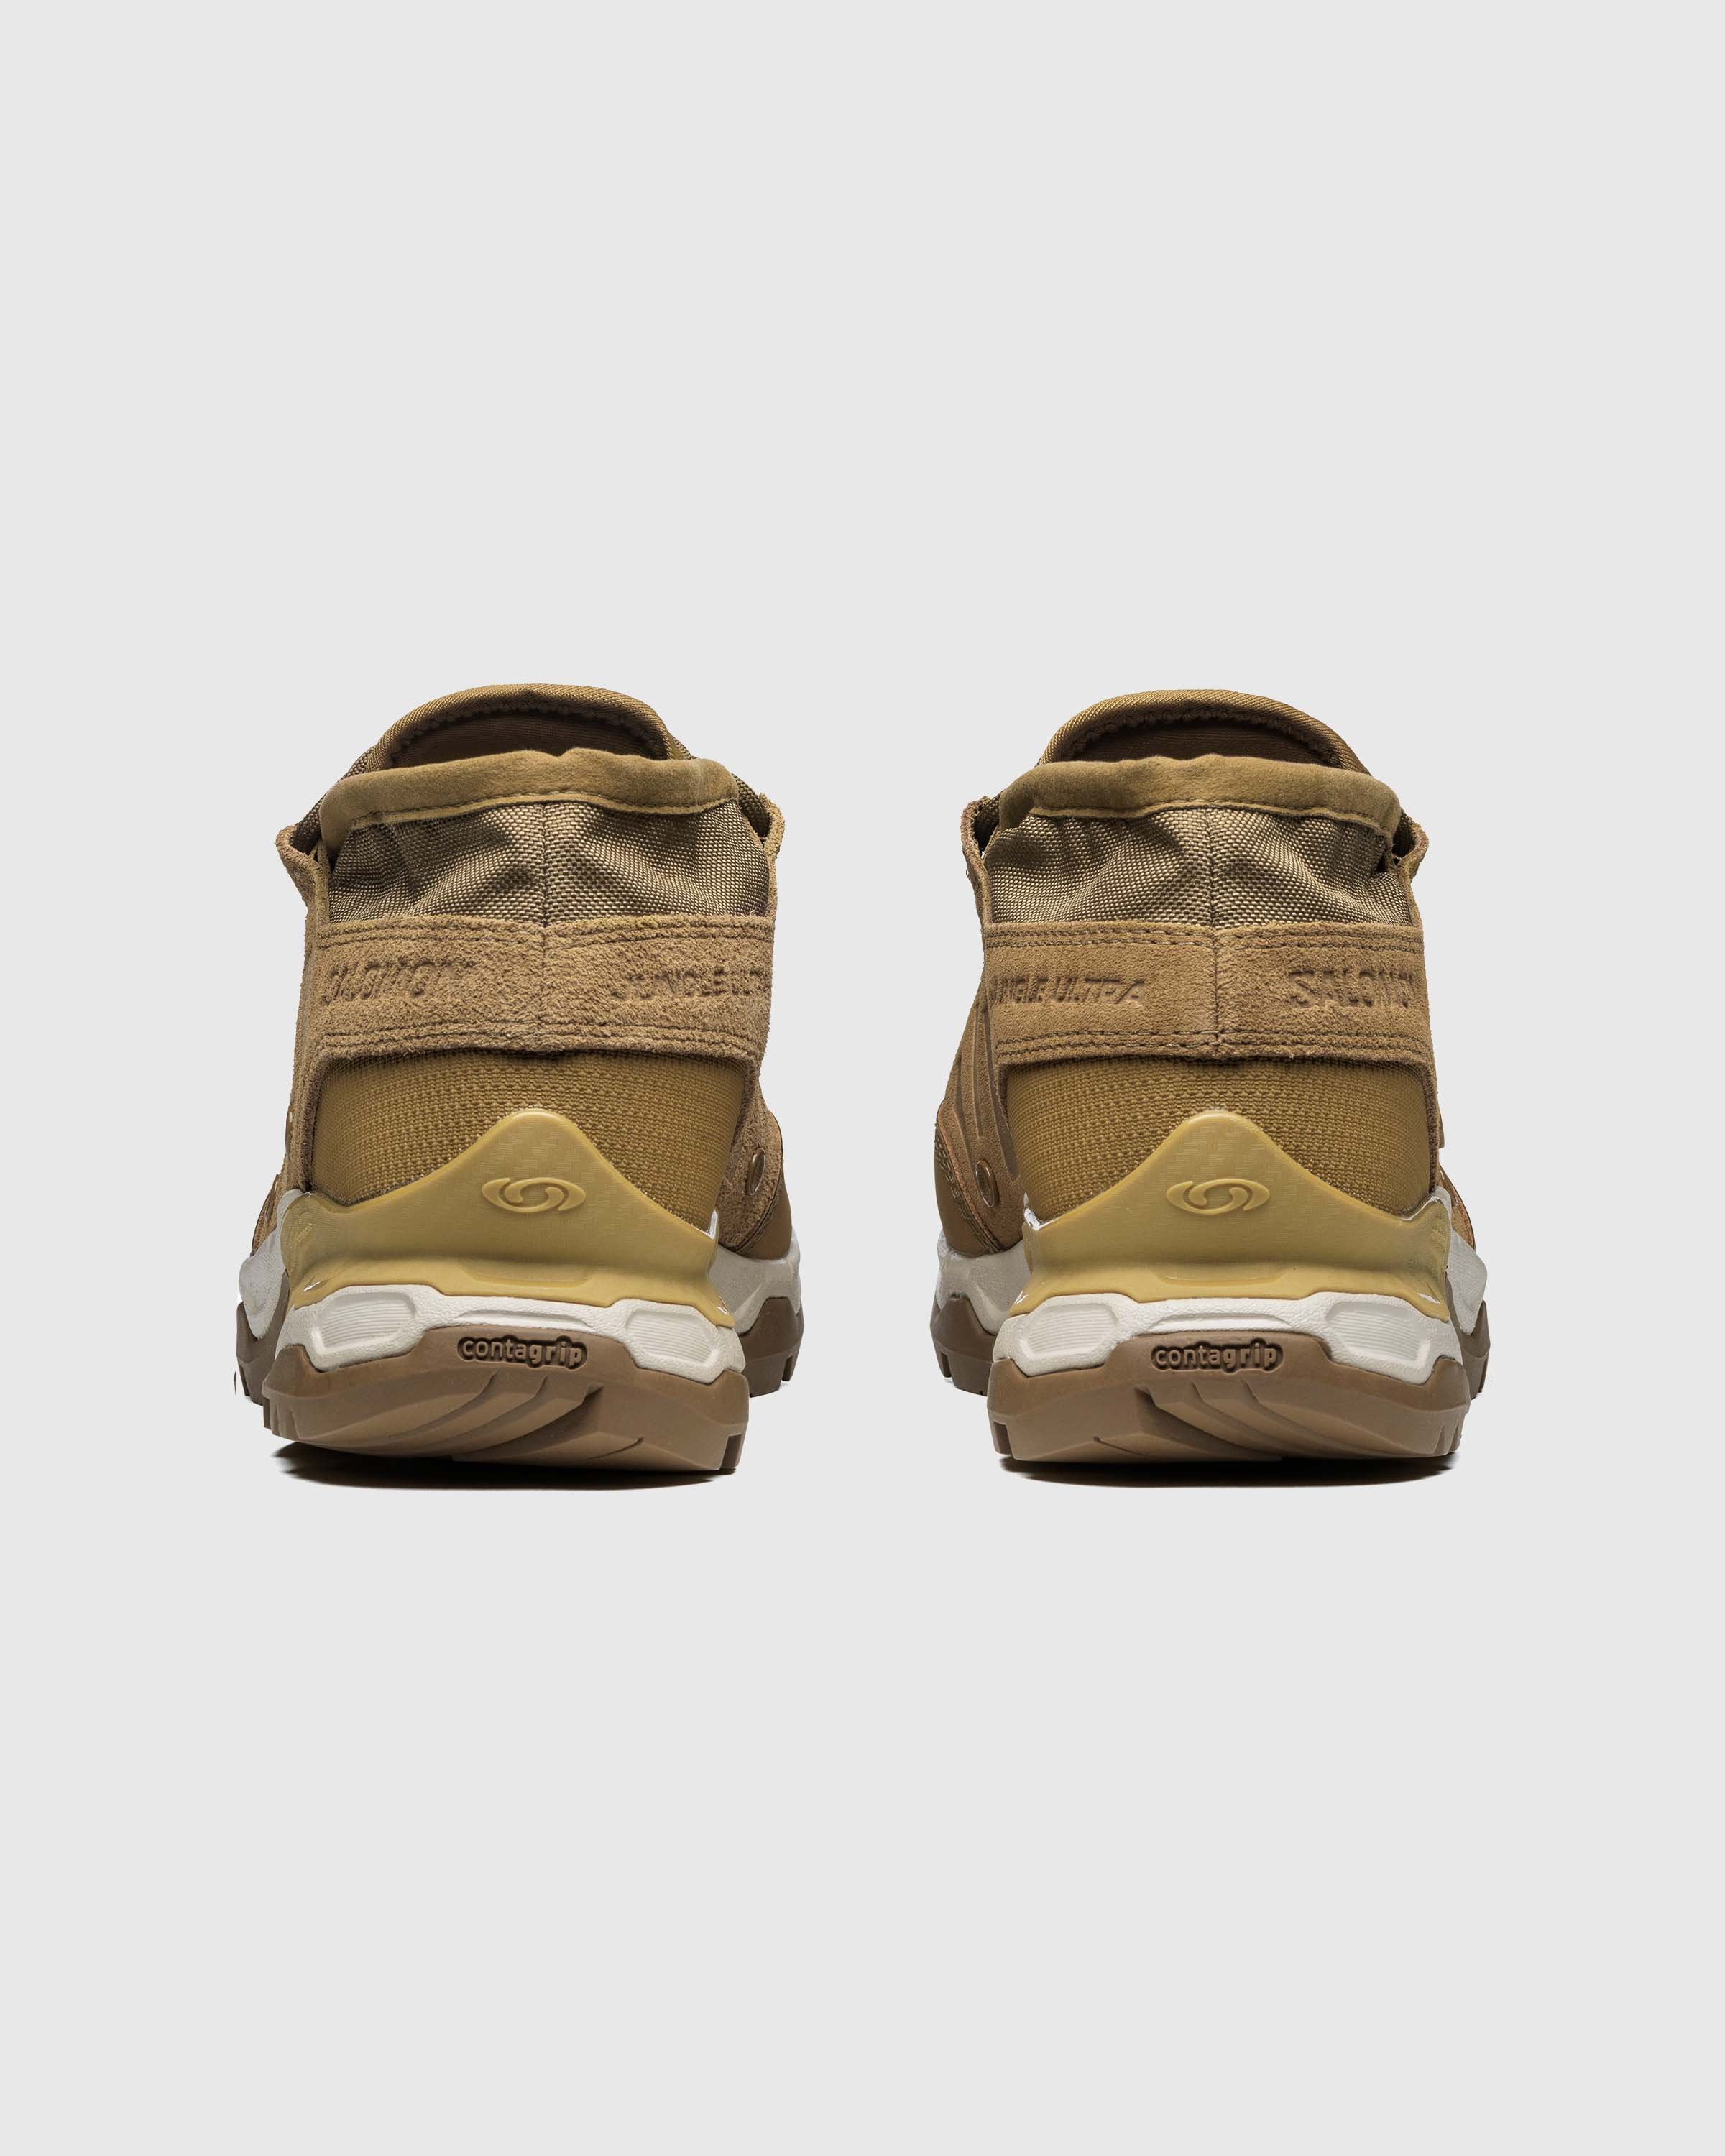 Salomon - Jungle Ultra Low Advanced Dull Go - Footwear - Brown - Image 3